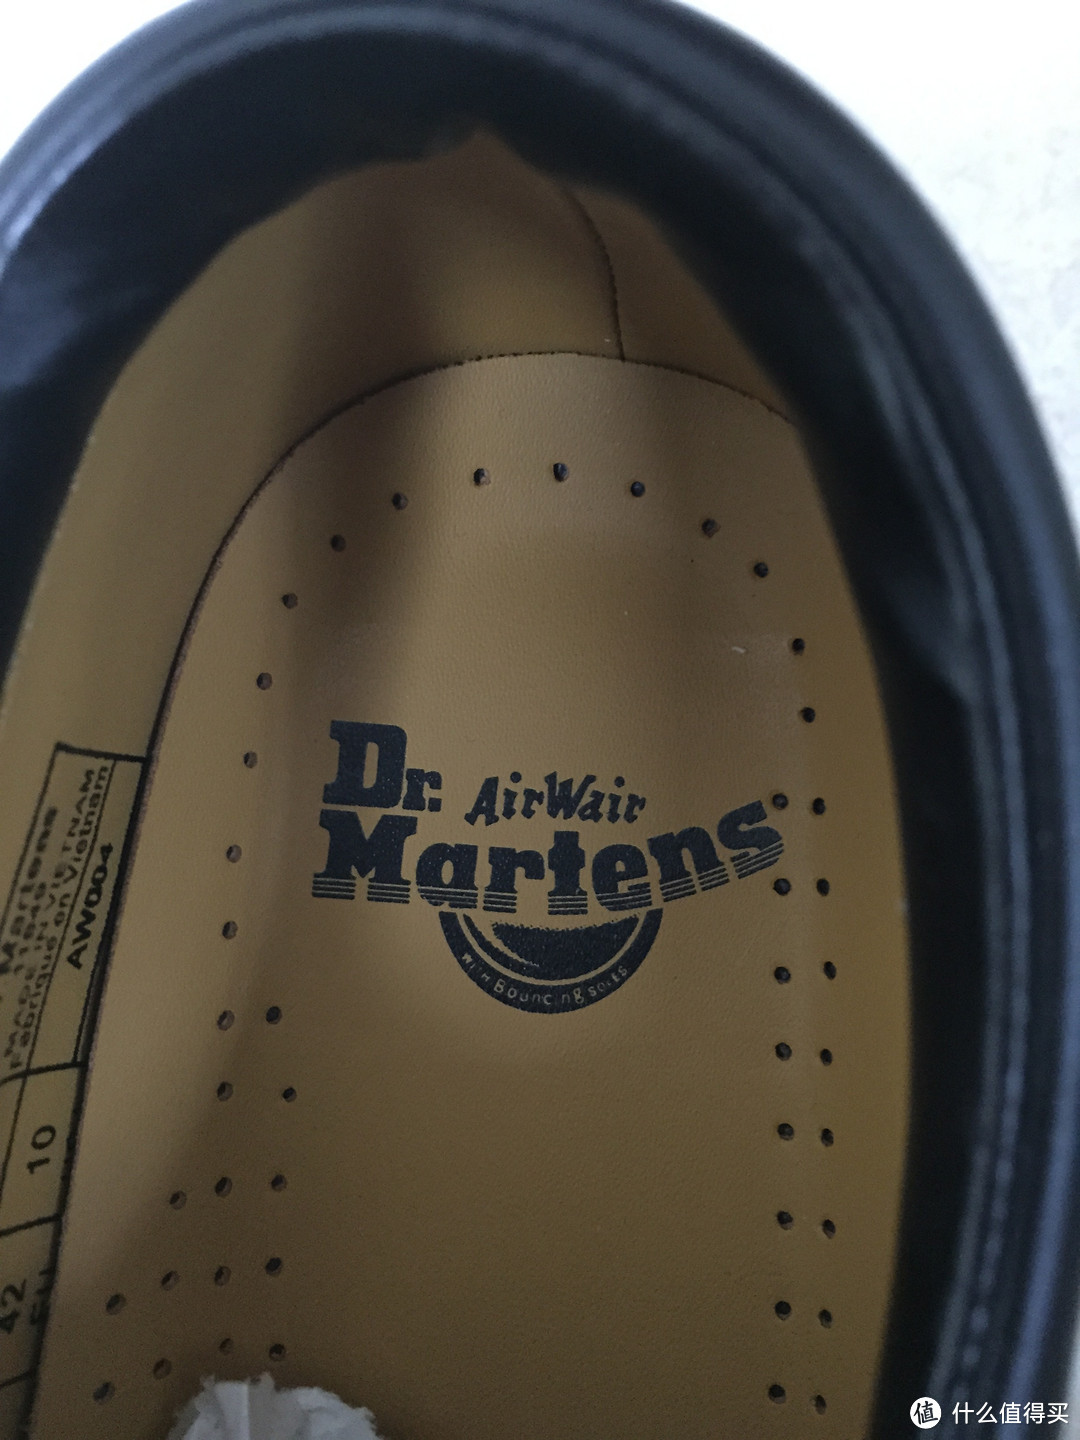 懒穷男海淘 Dr. Martens 8053 & Rockport 乐步 Trailbreaker 雪地靴